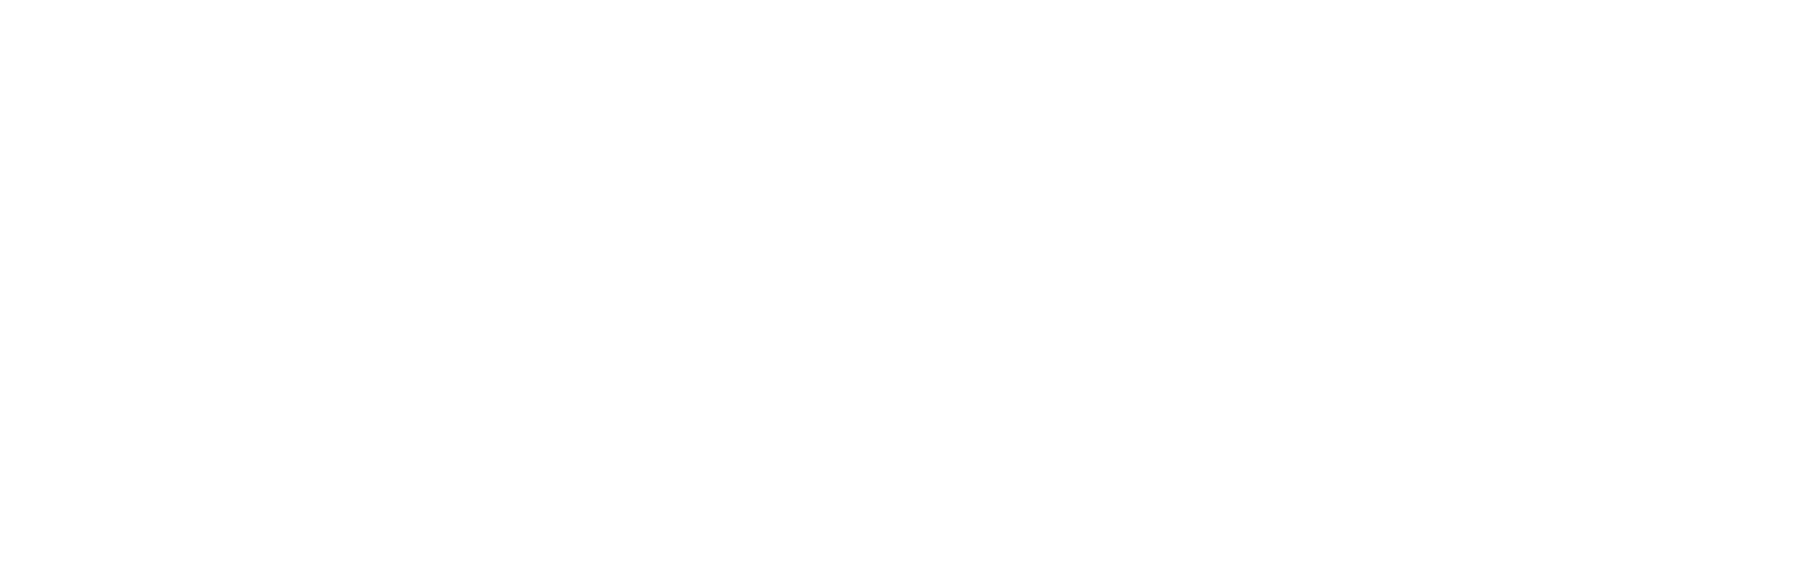 Matsiko - Through These Eyes Film Logo